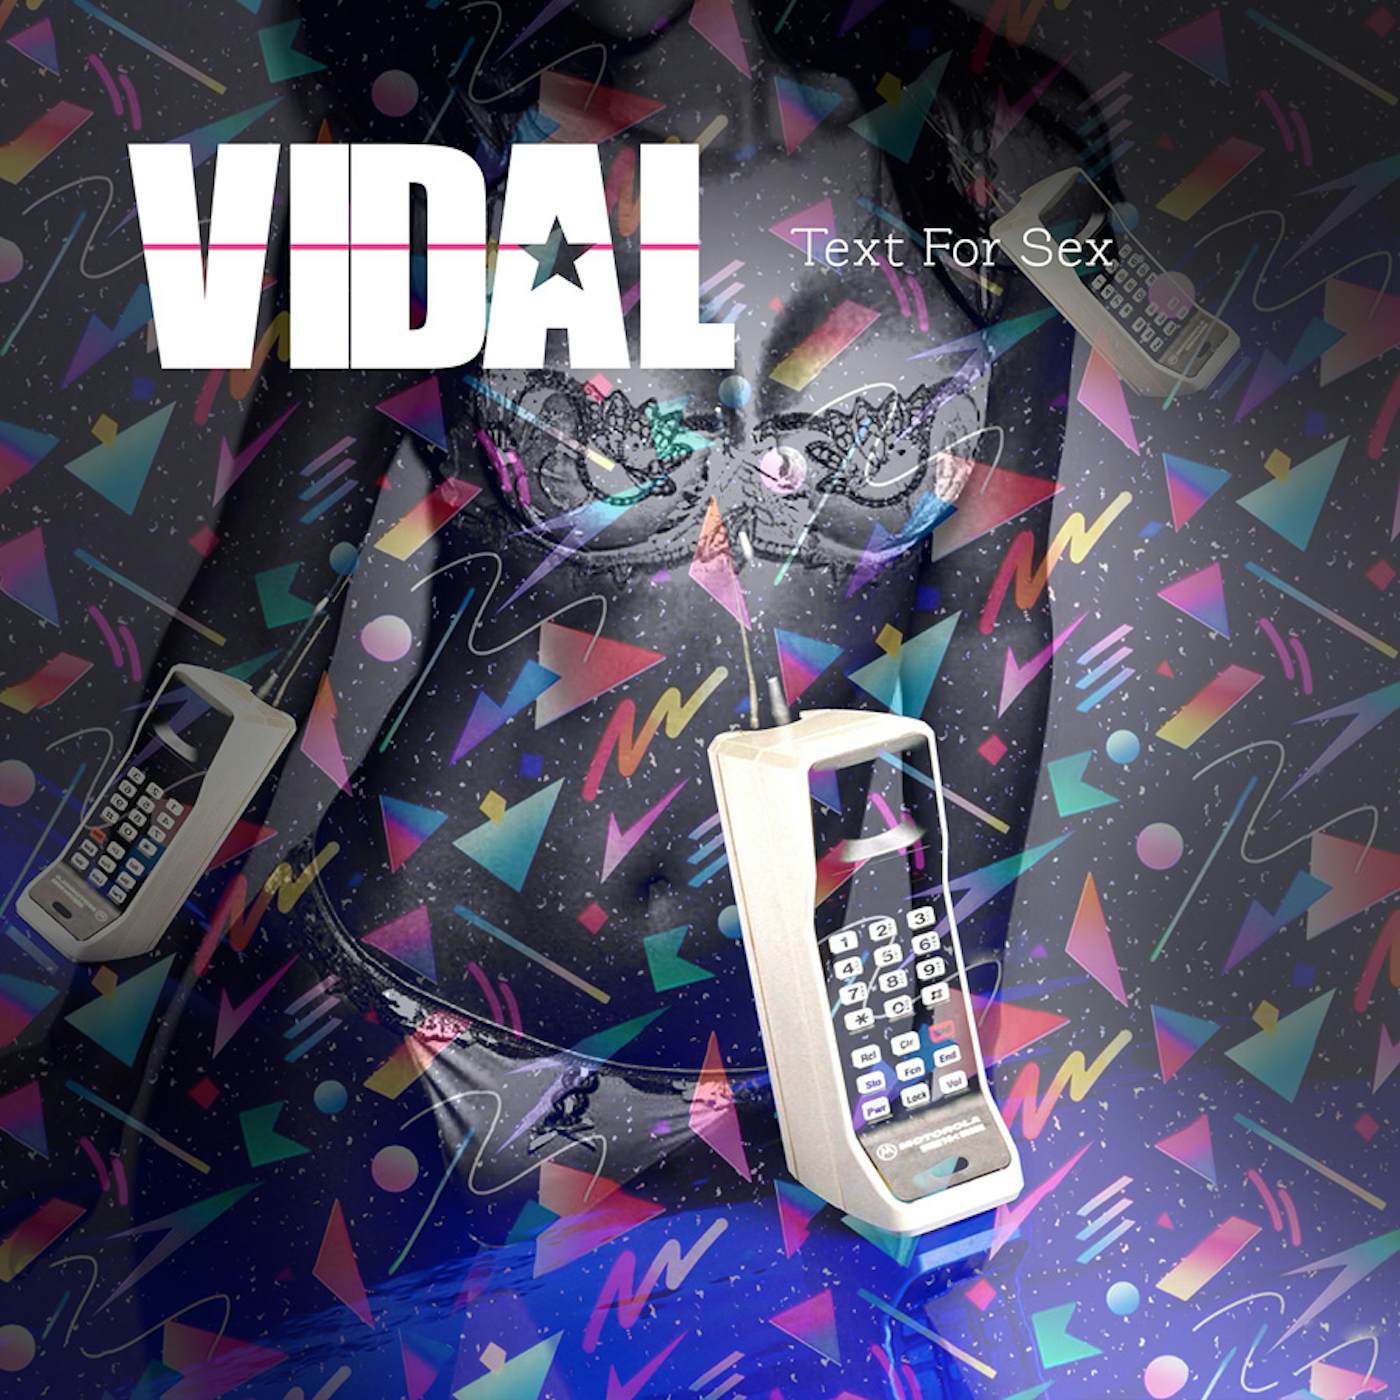 Vidal TEXT FOR SEX CD